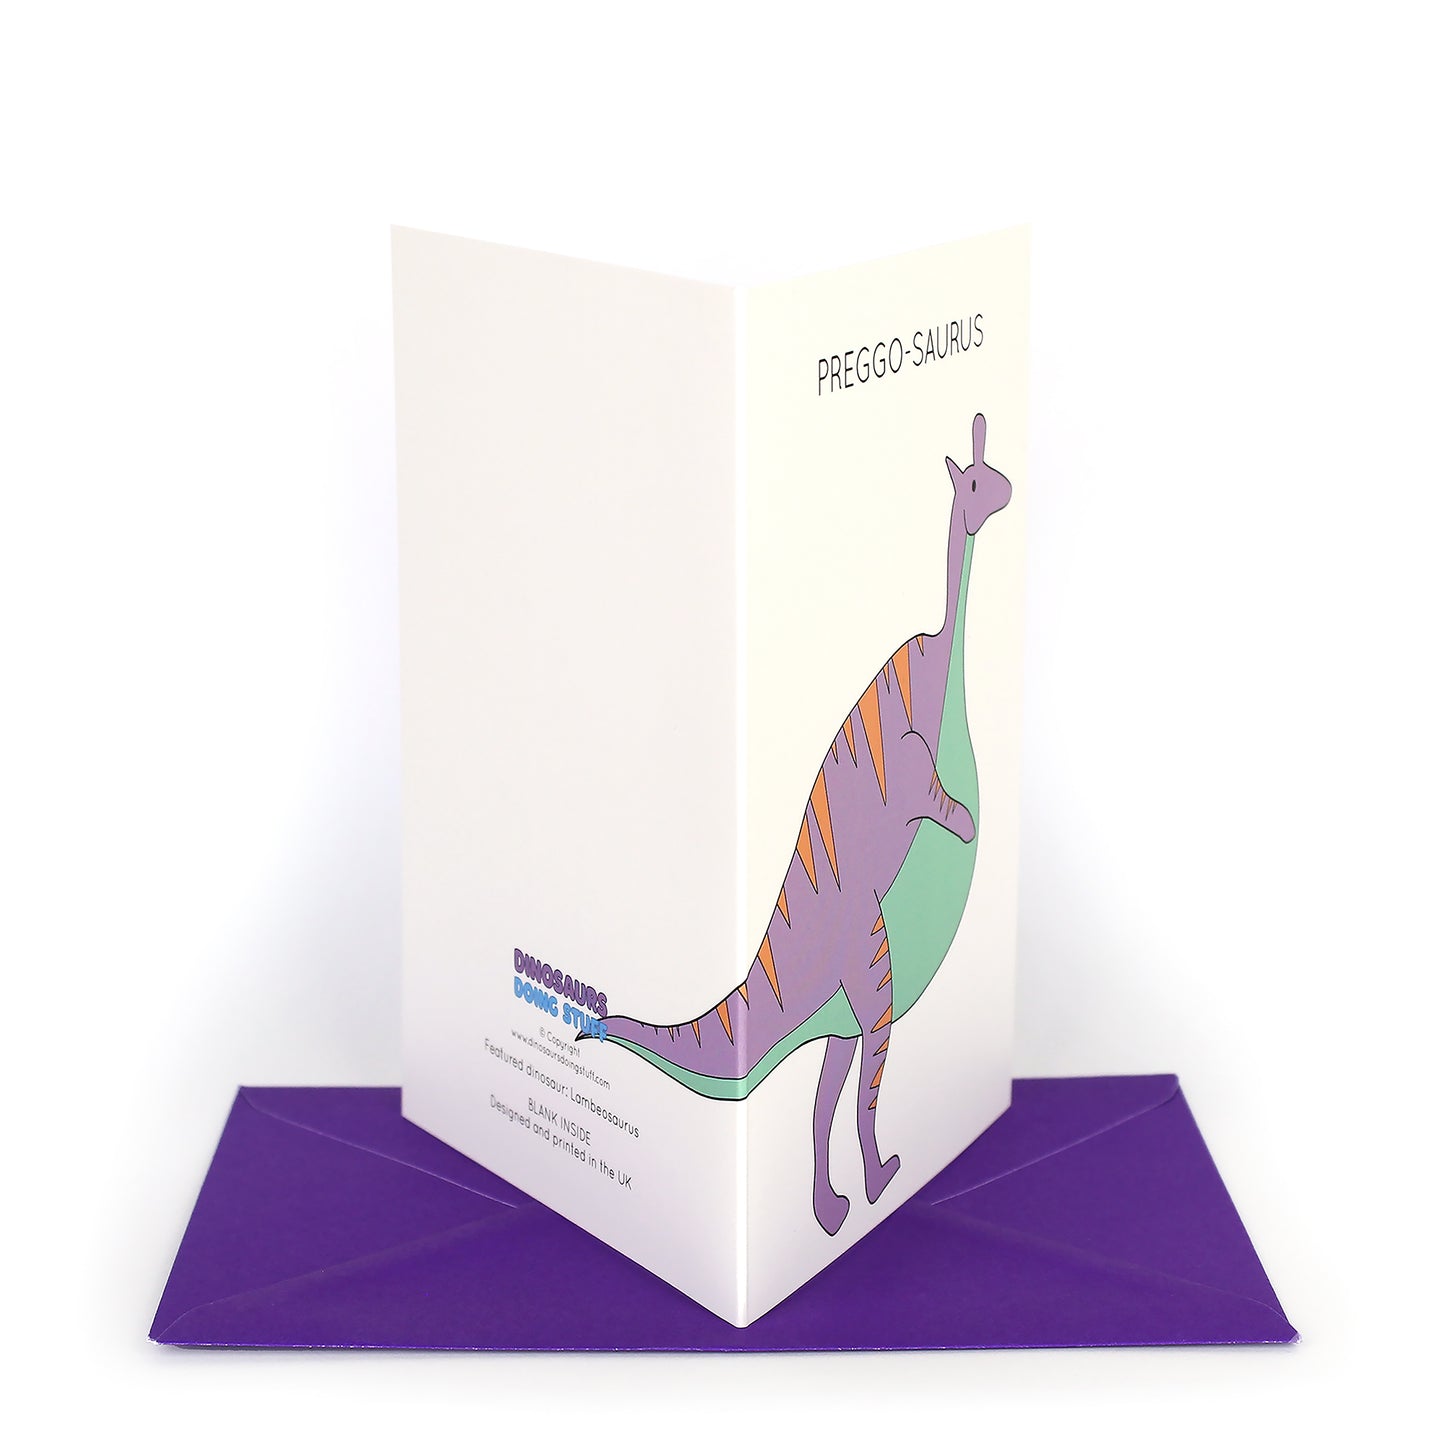 Preggo-saurus Dinosaur Greeting Card